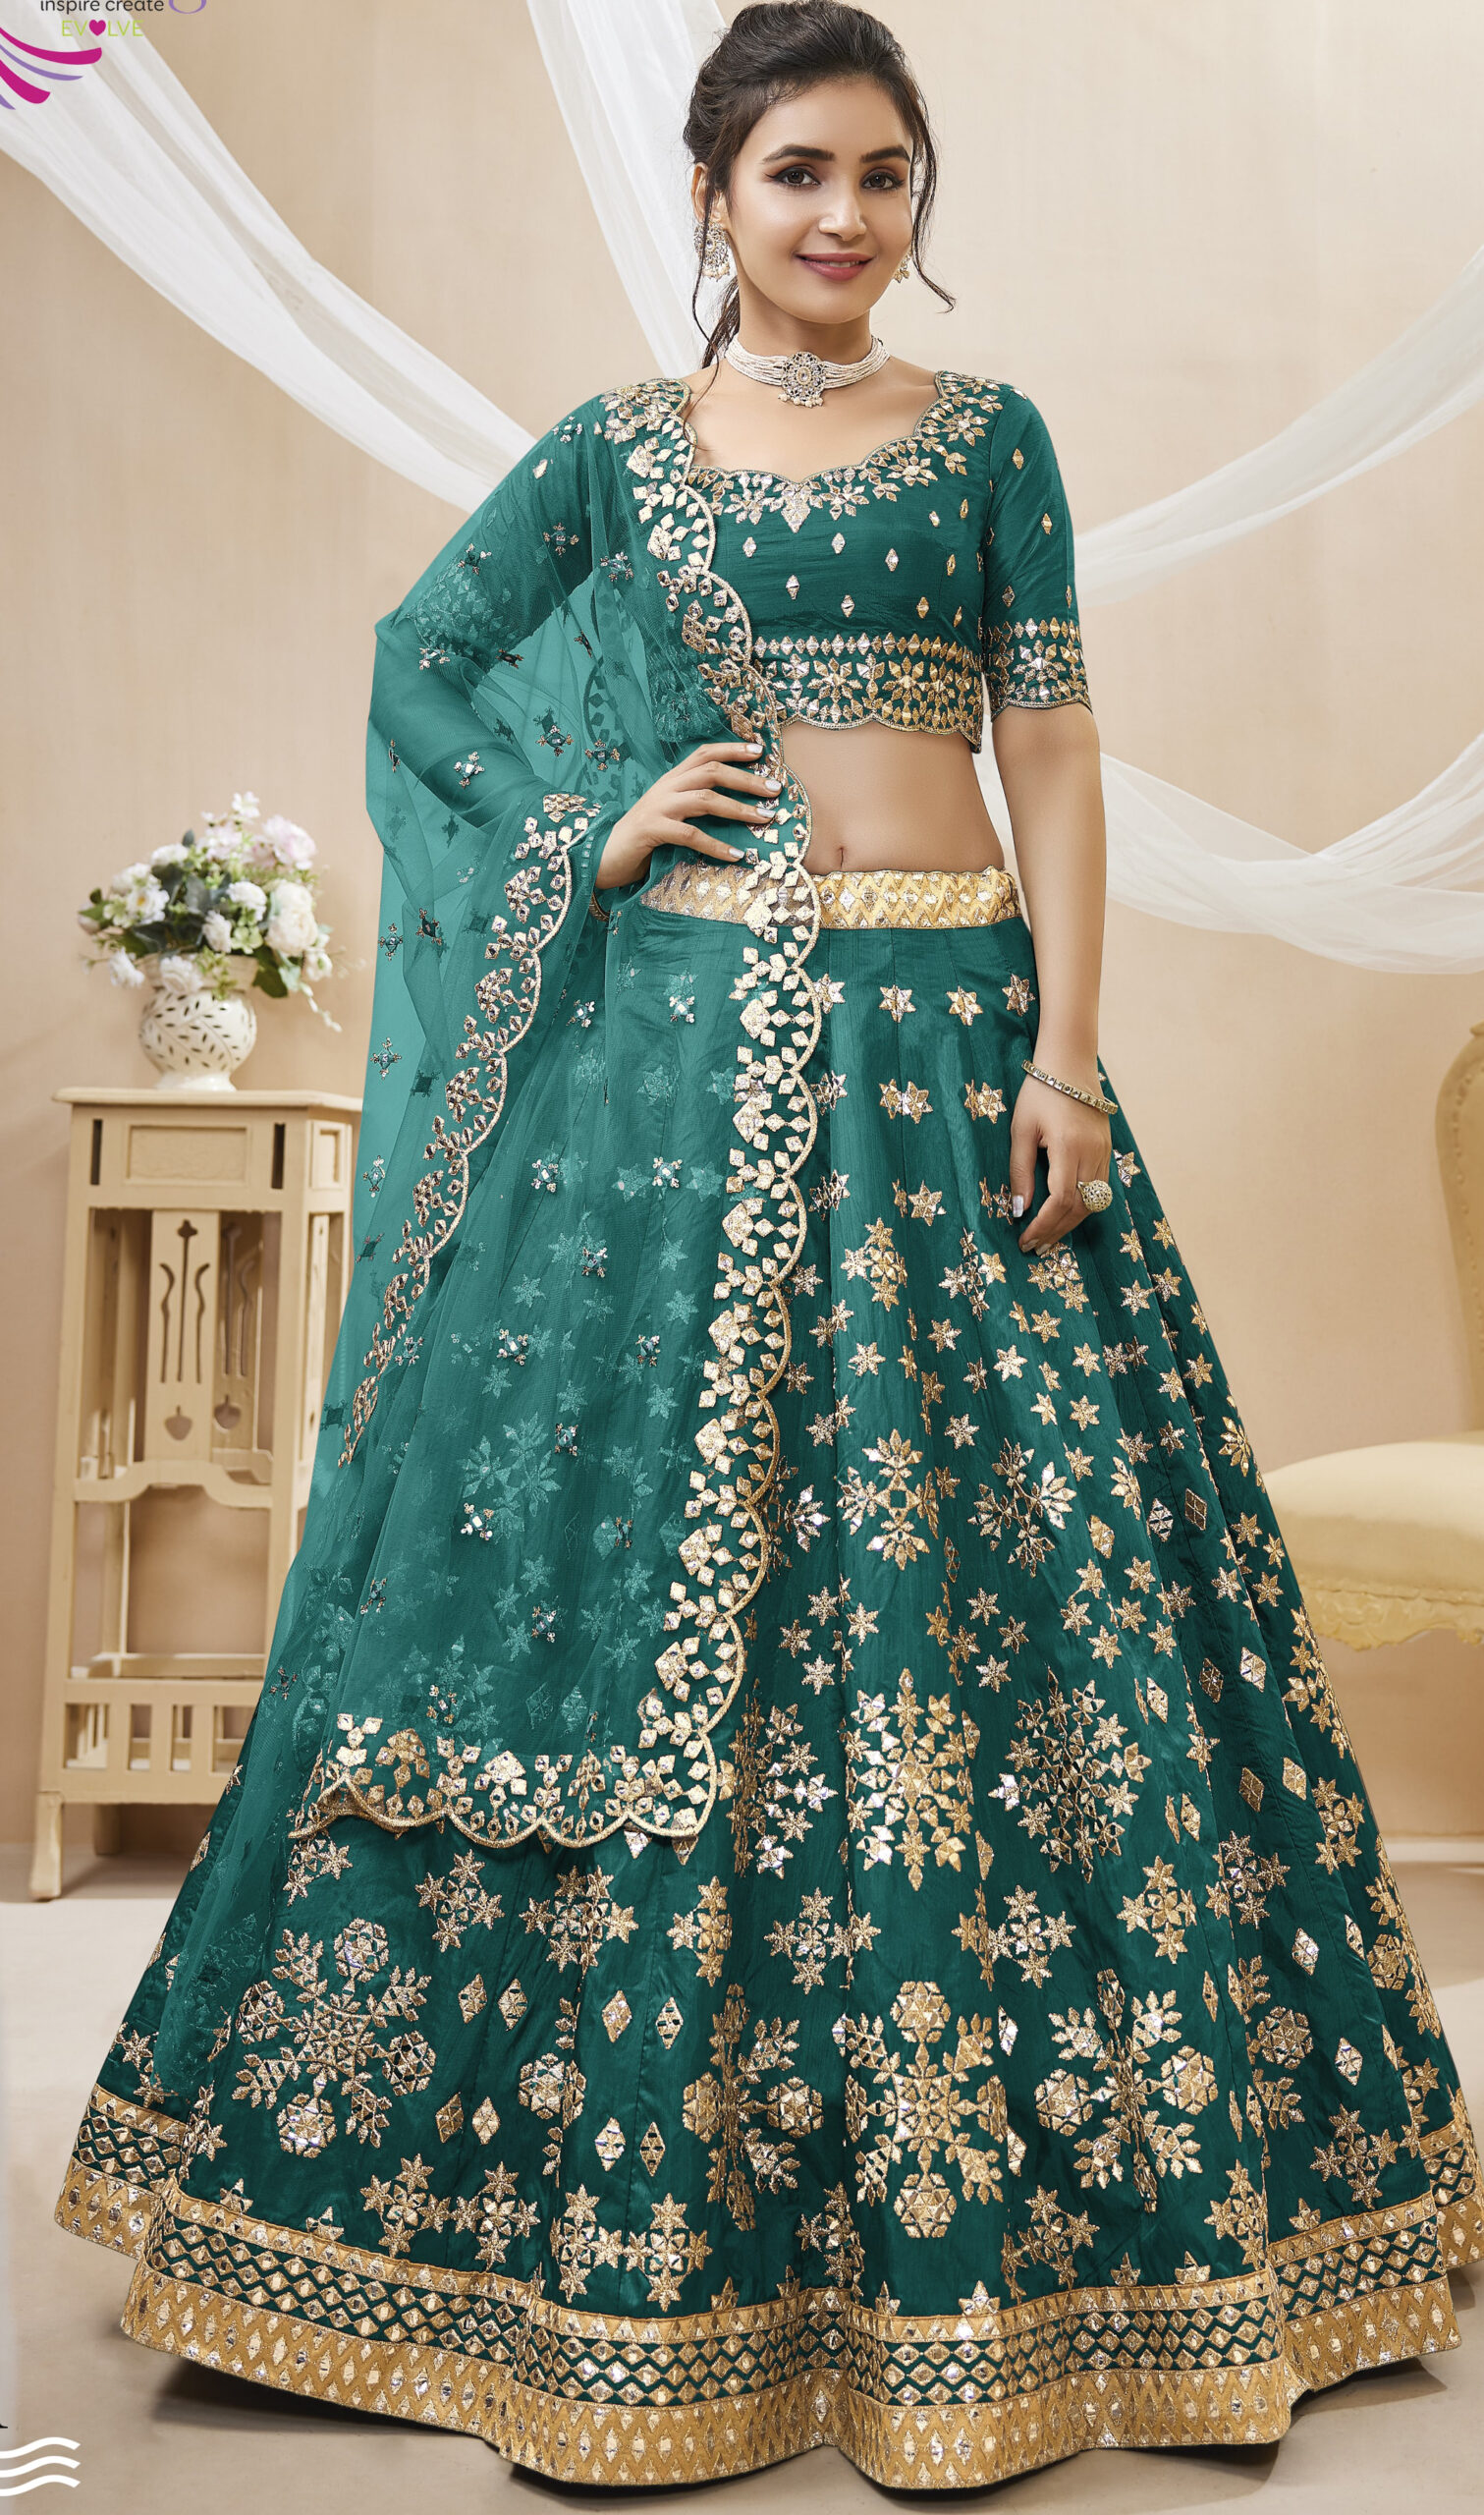 Green Color Wedding Designer lehenga choli for Women - sethnik.com